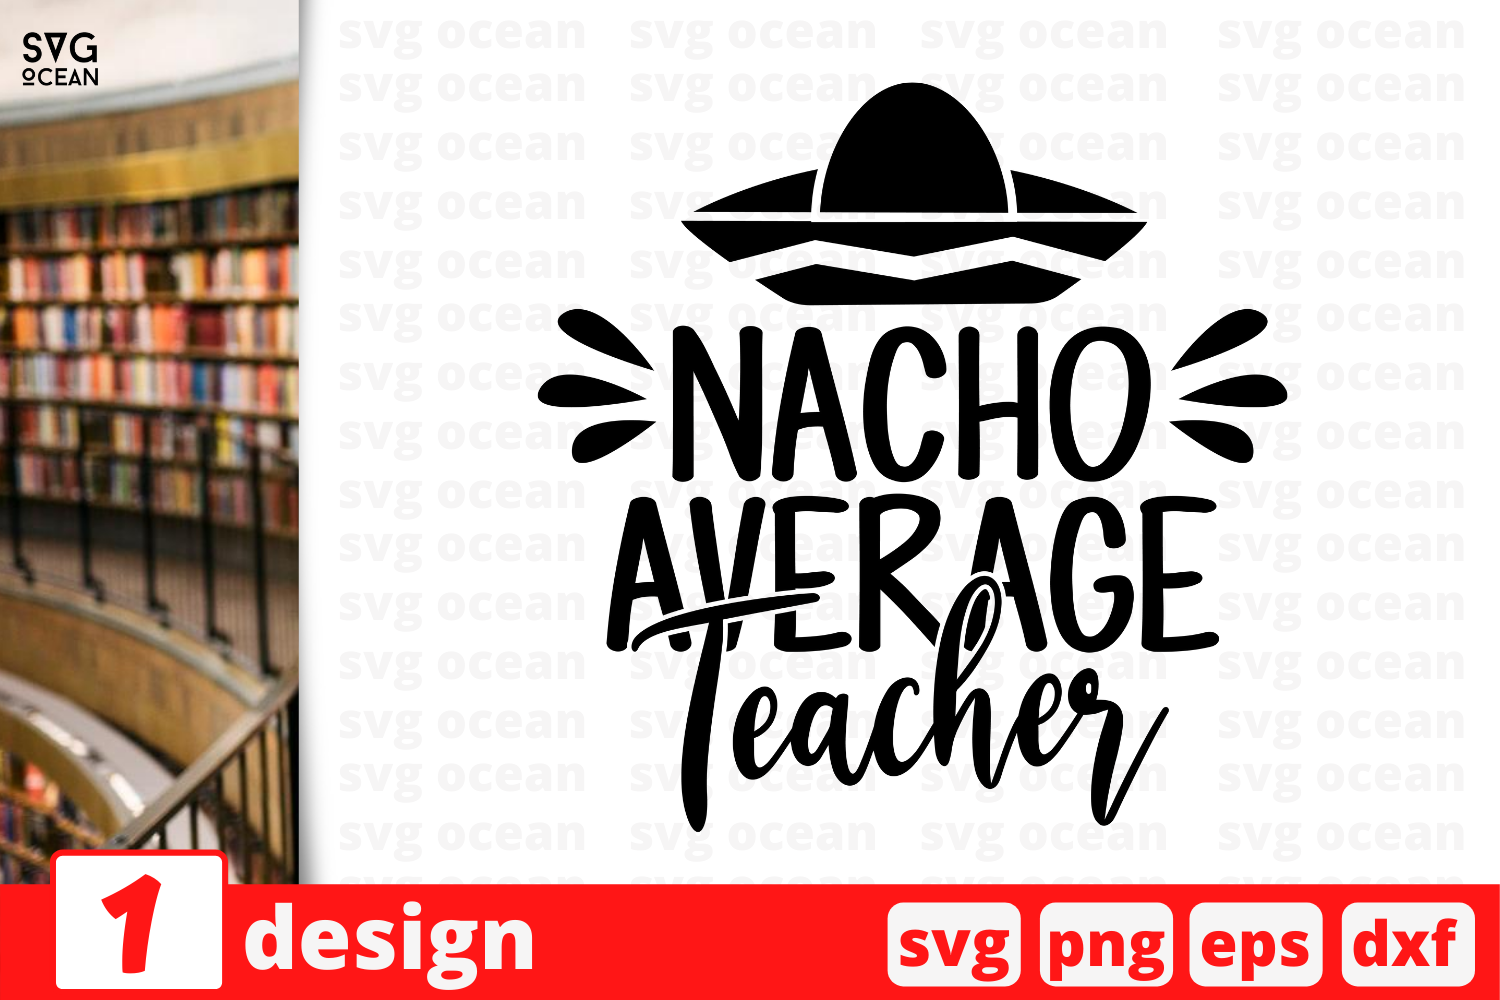 Nacho Average Teacher Svg Free - 346+ Best Free SVG File